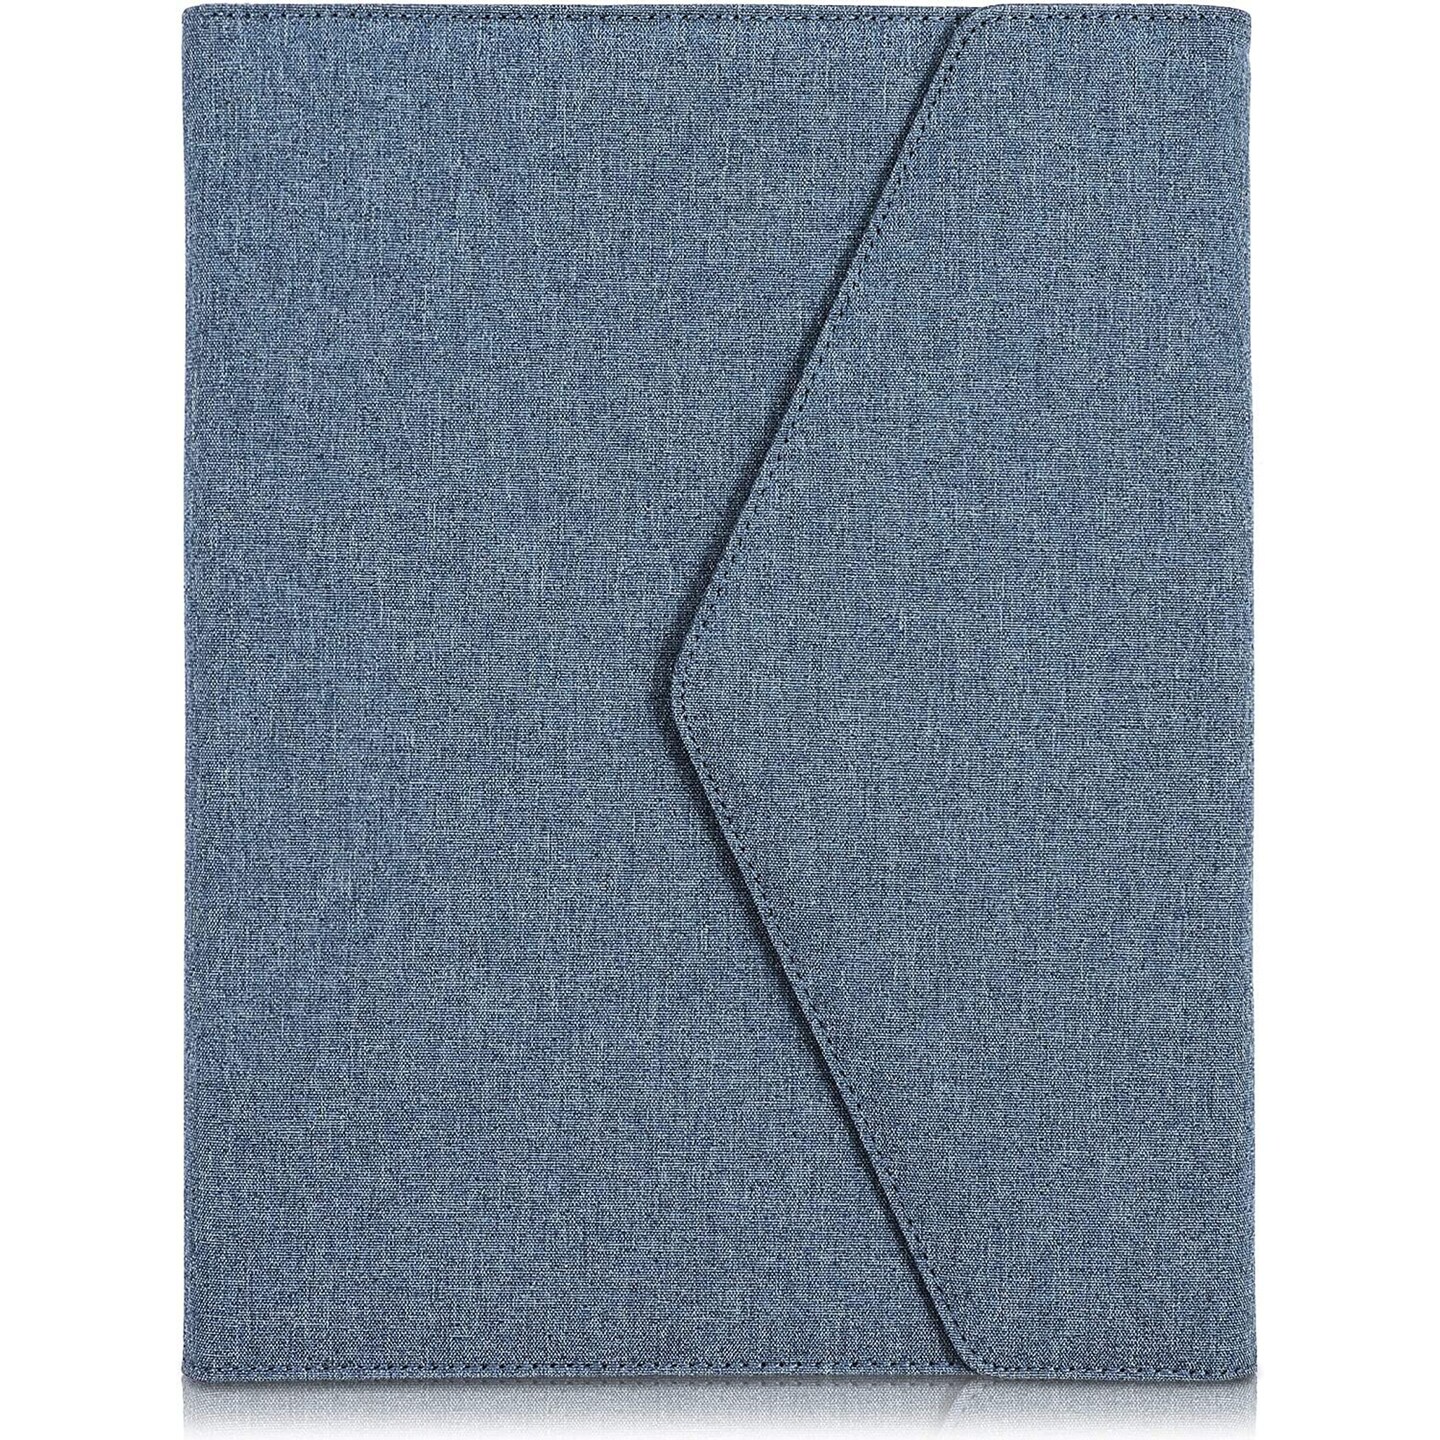 Blue Portfolio Folder, Business Portfolio Pad Binder (12.5 x 10 in)